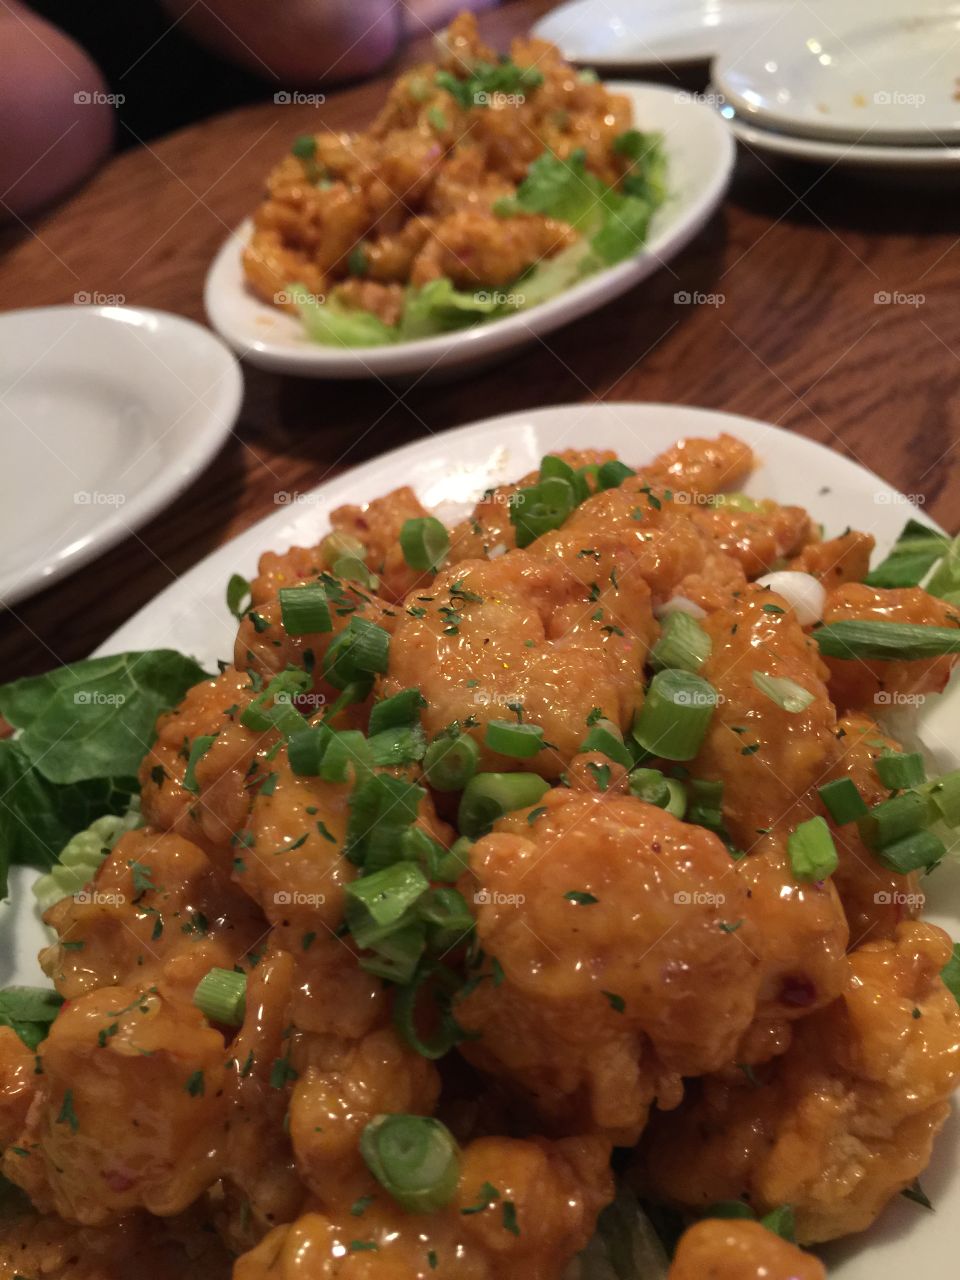 Plates of shrimp. Shrimp appetizer at a local restaurant 